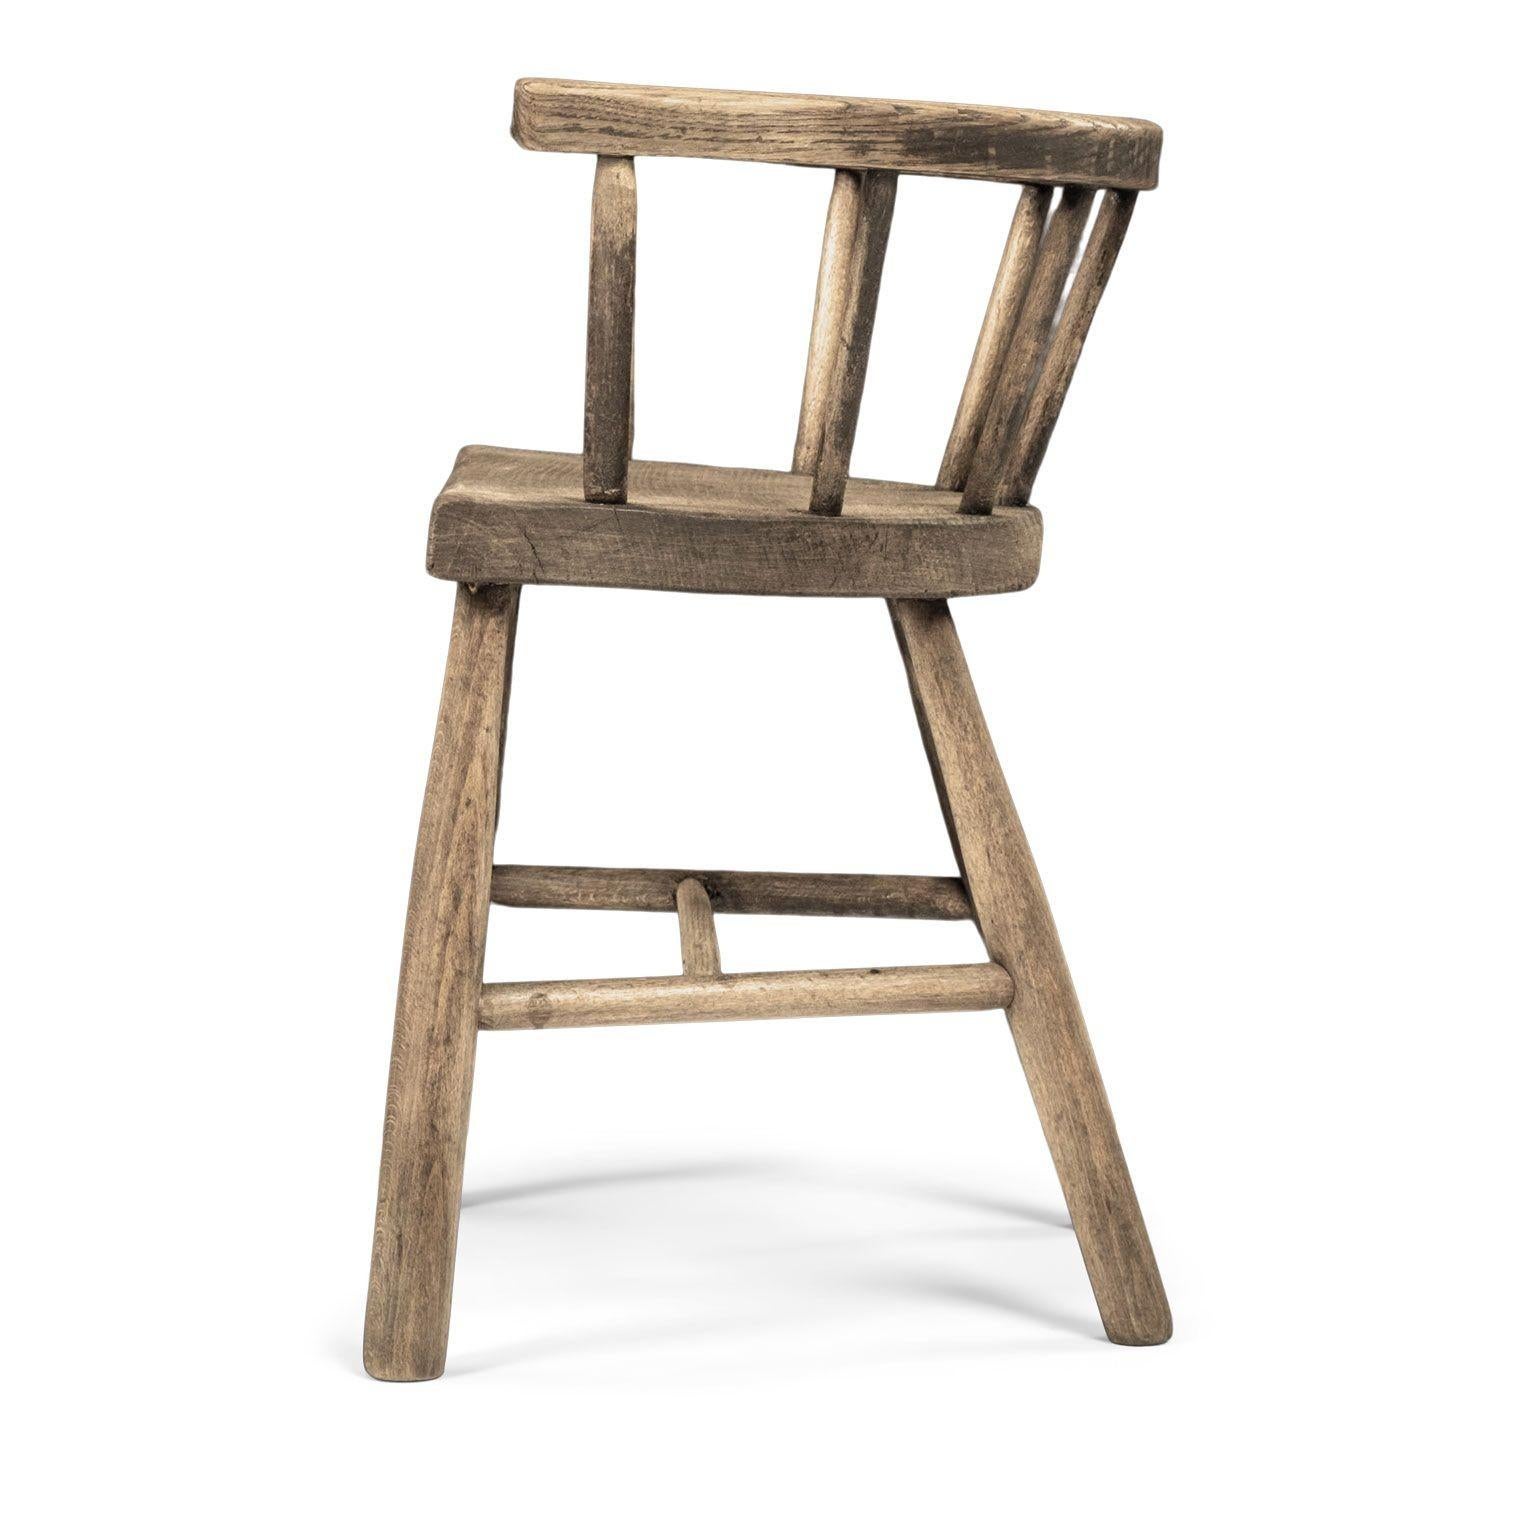 19th Century Small Vernacular Chair 1